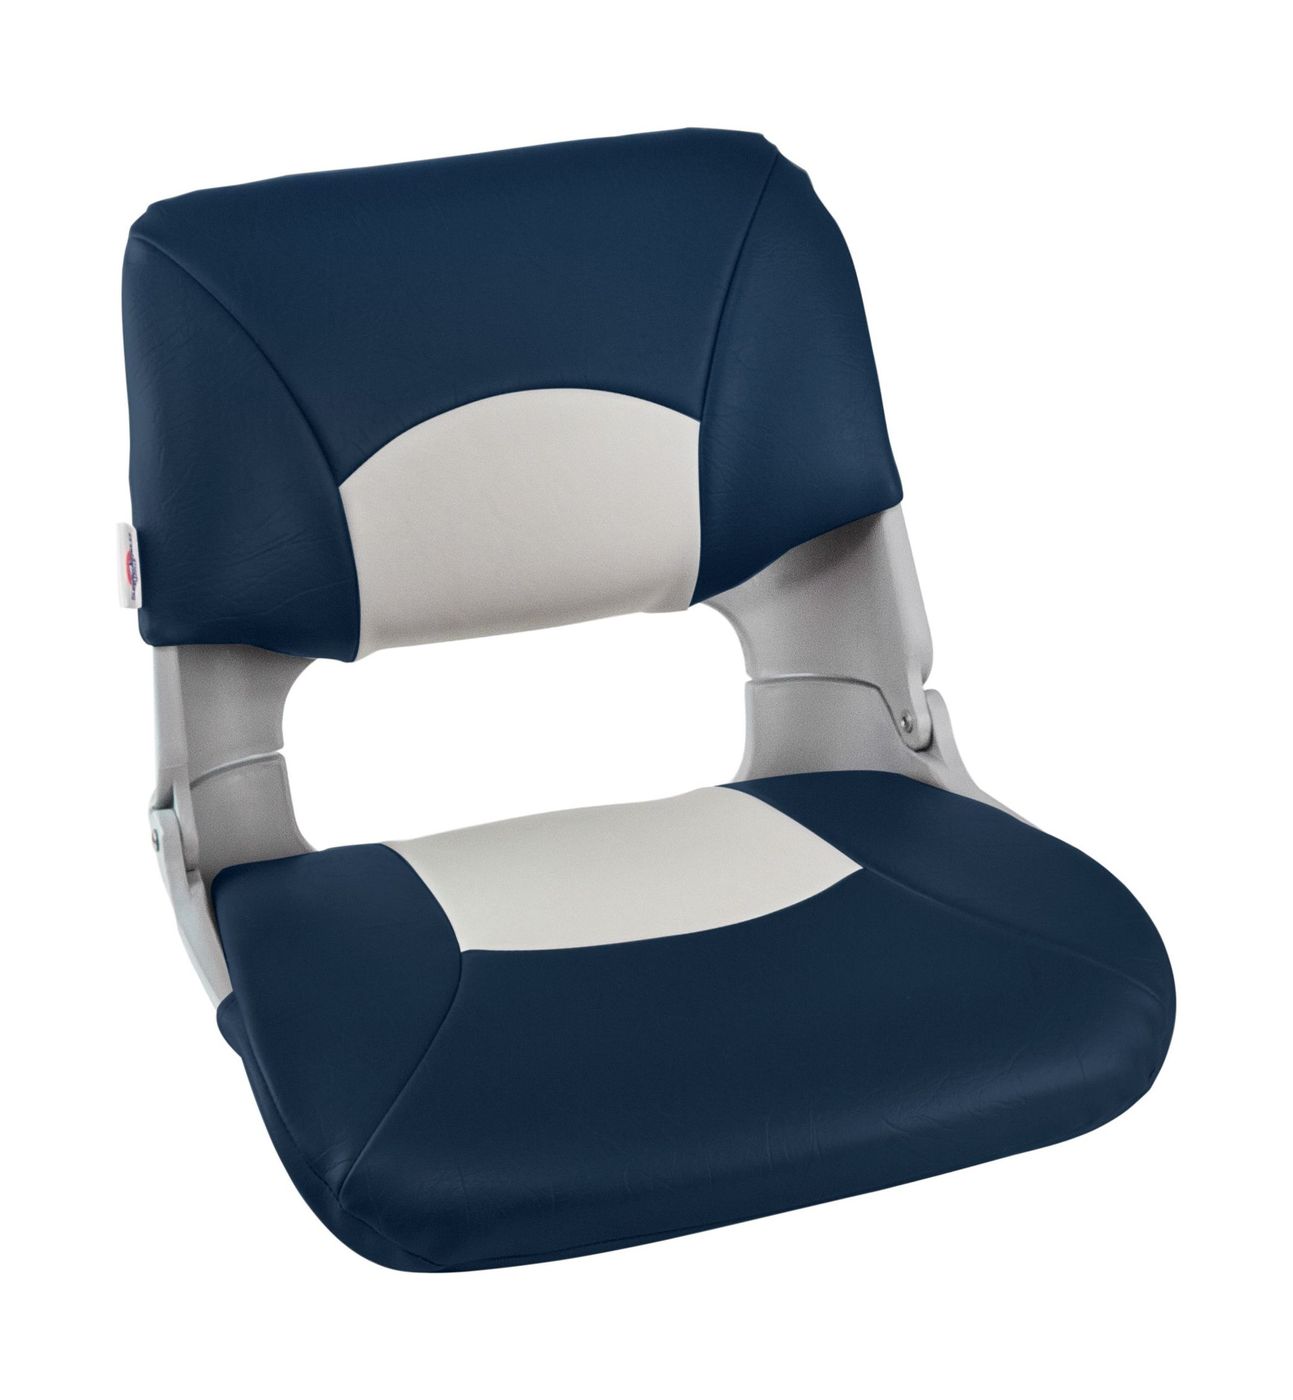 Кресло складное мягкое SKIPPER, цвет серый/синий 1061019 кресло мягкое складное высокая спинка обивка винил синий marine rocket 75127b mr